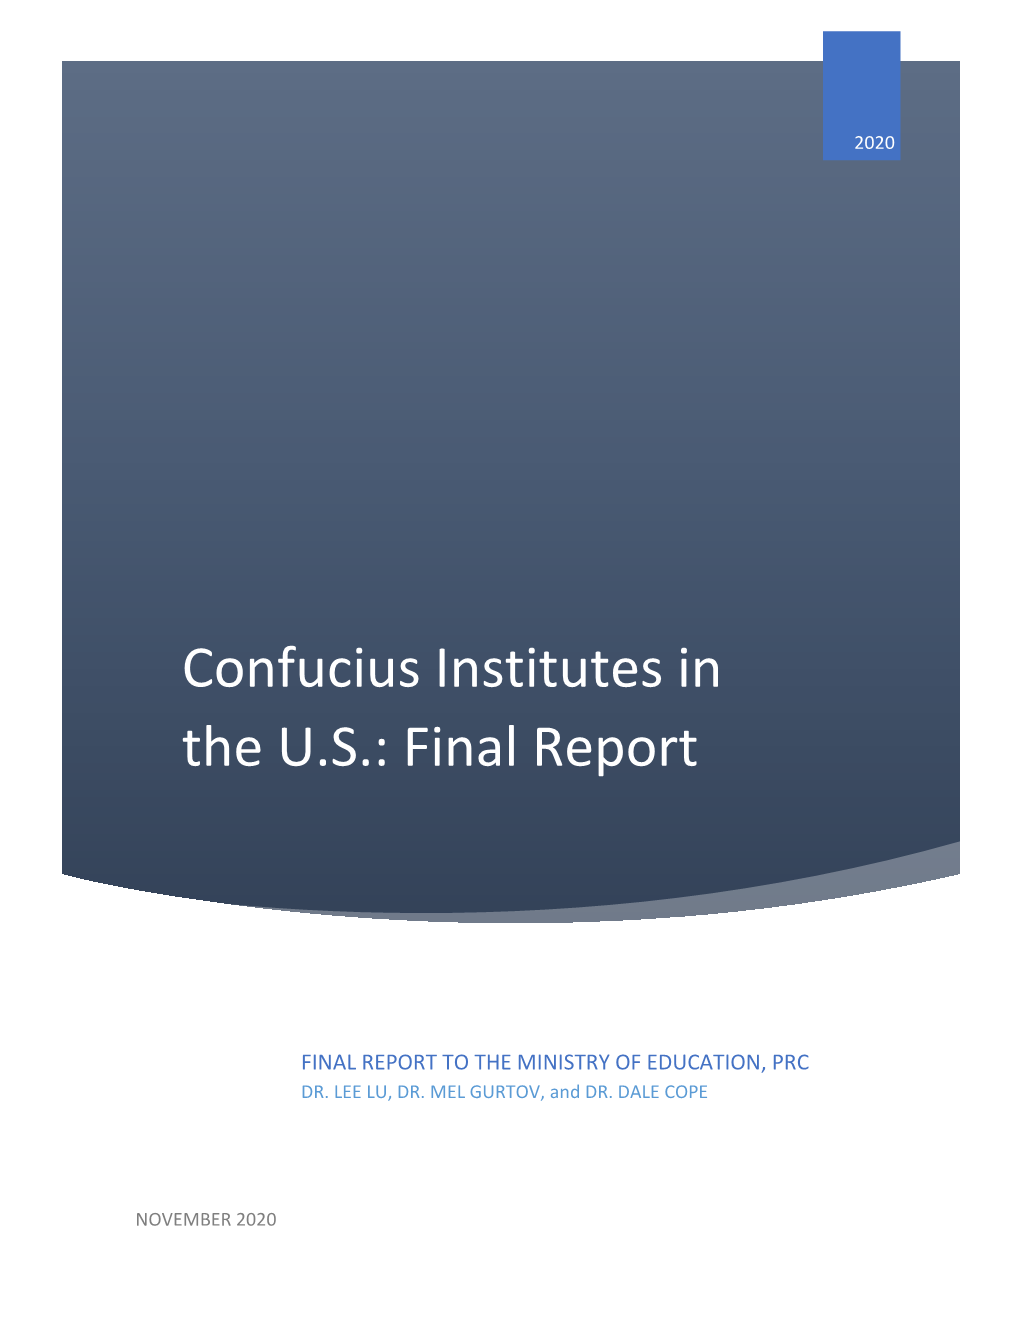 Confucius Institutes in the U.S.: Final Report